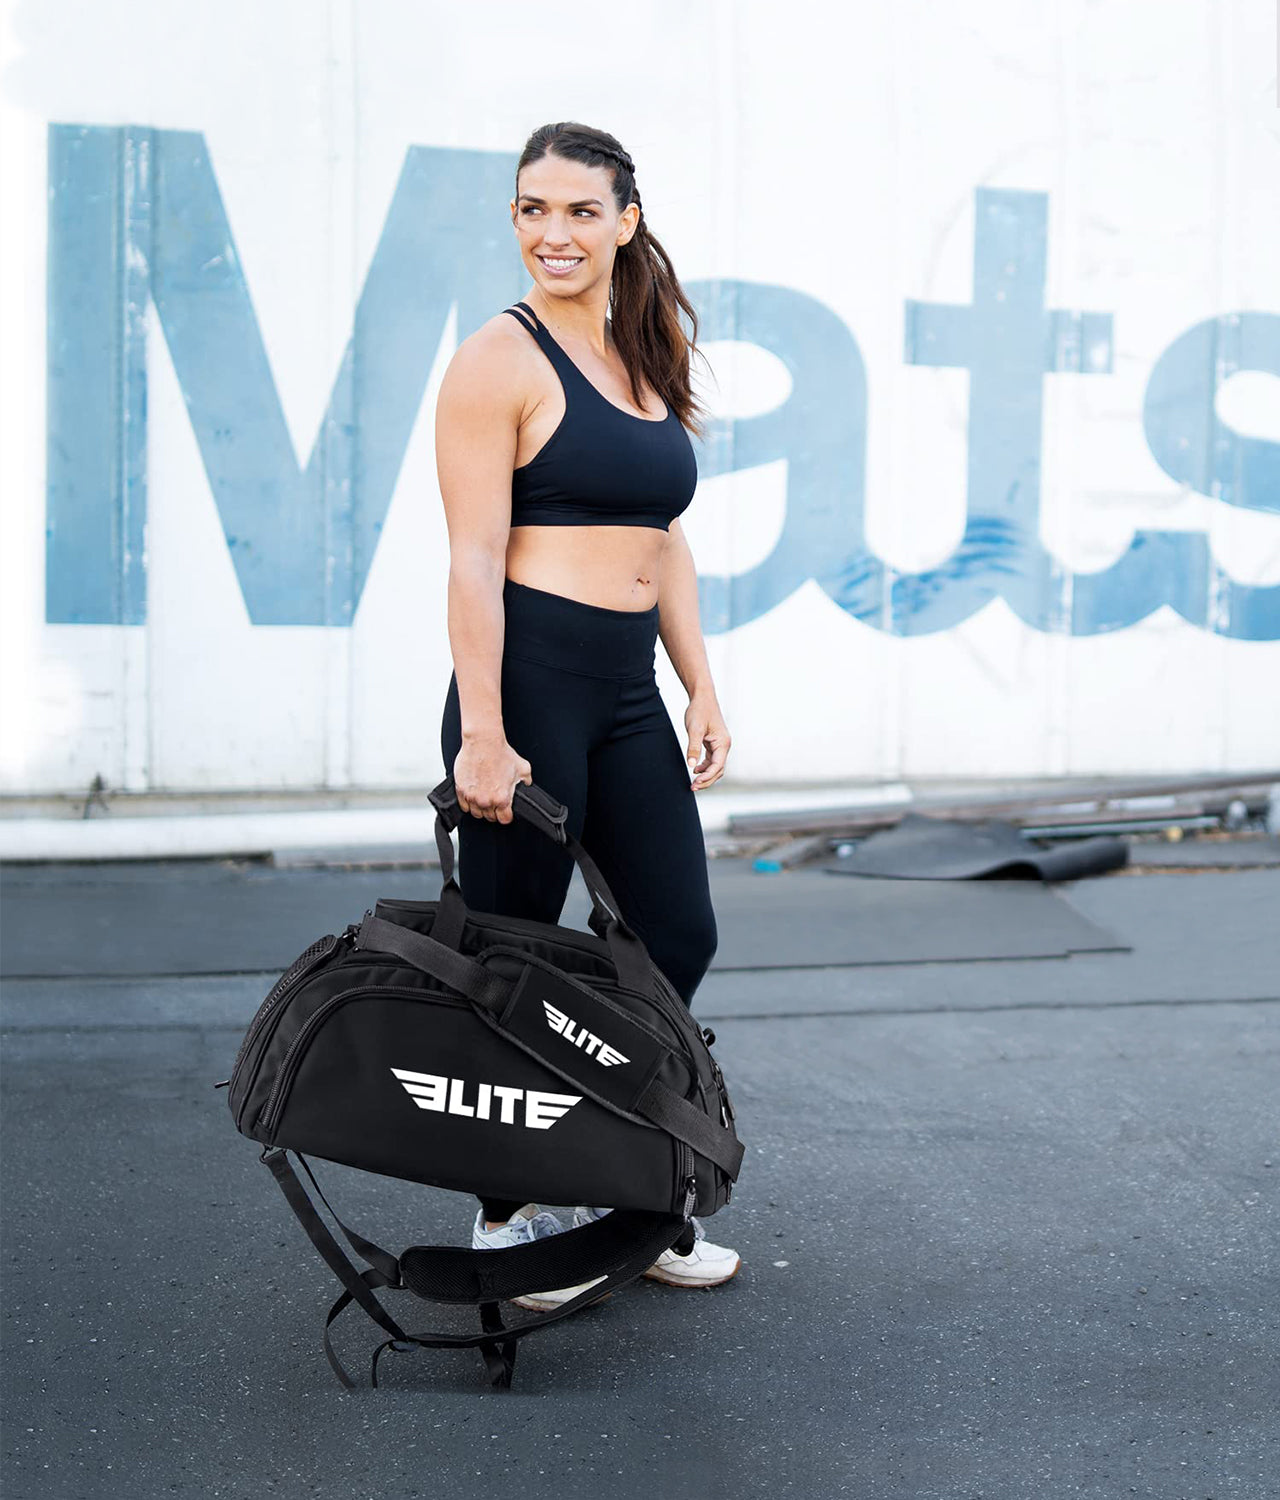 Elite Sports Warrior Black Large Duffel Boxing Gear Gym Bag